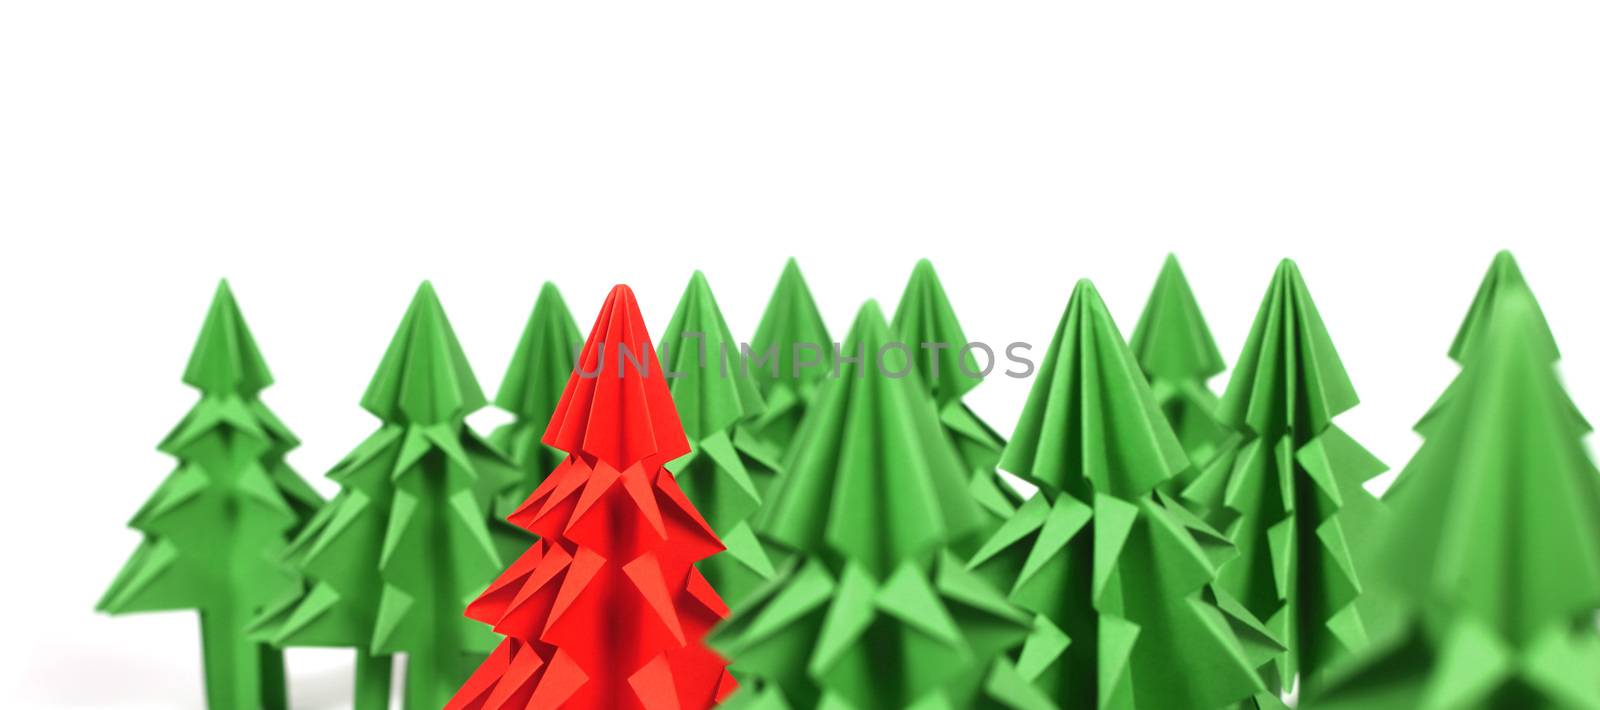 Origami Christmas trees by destillat